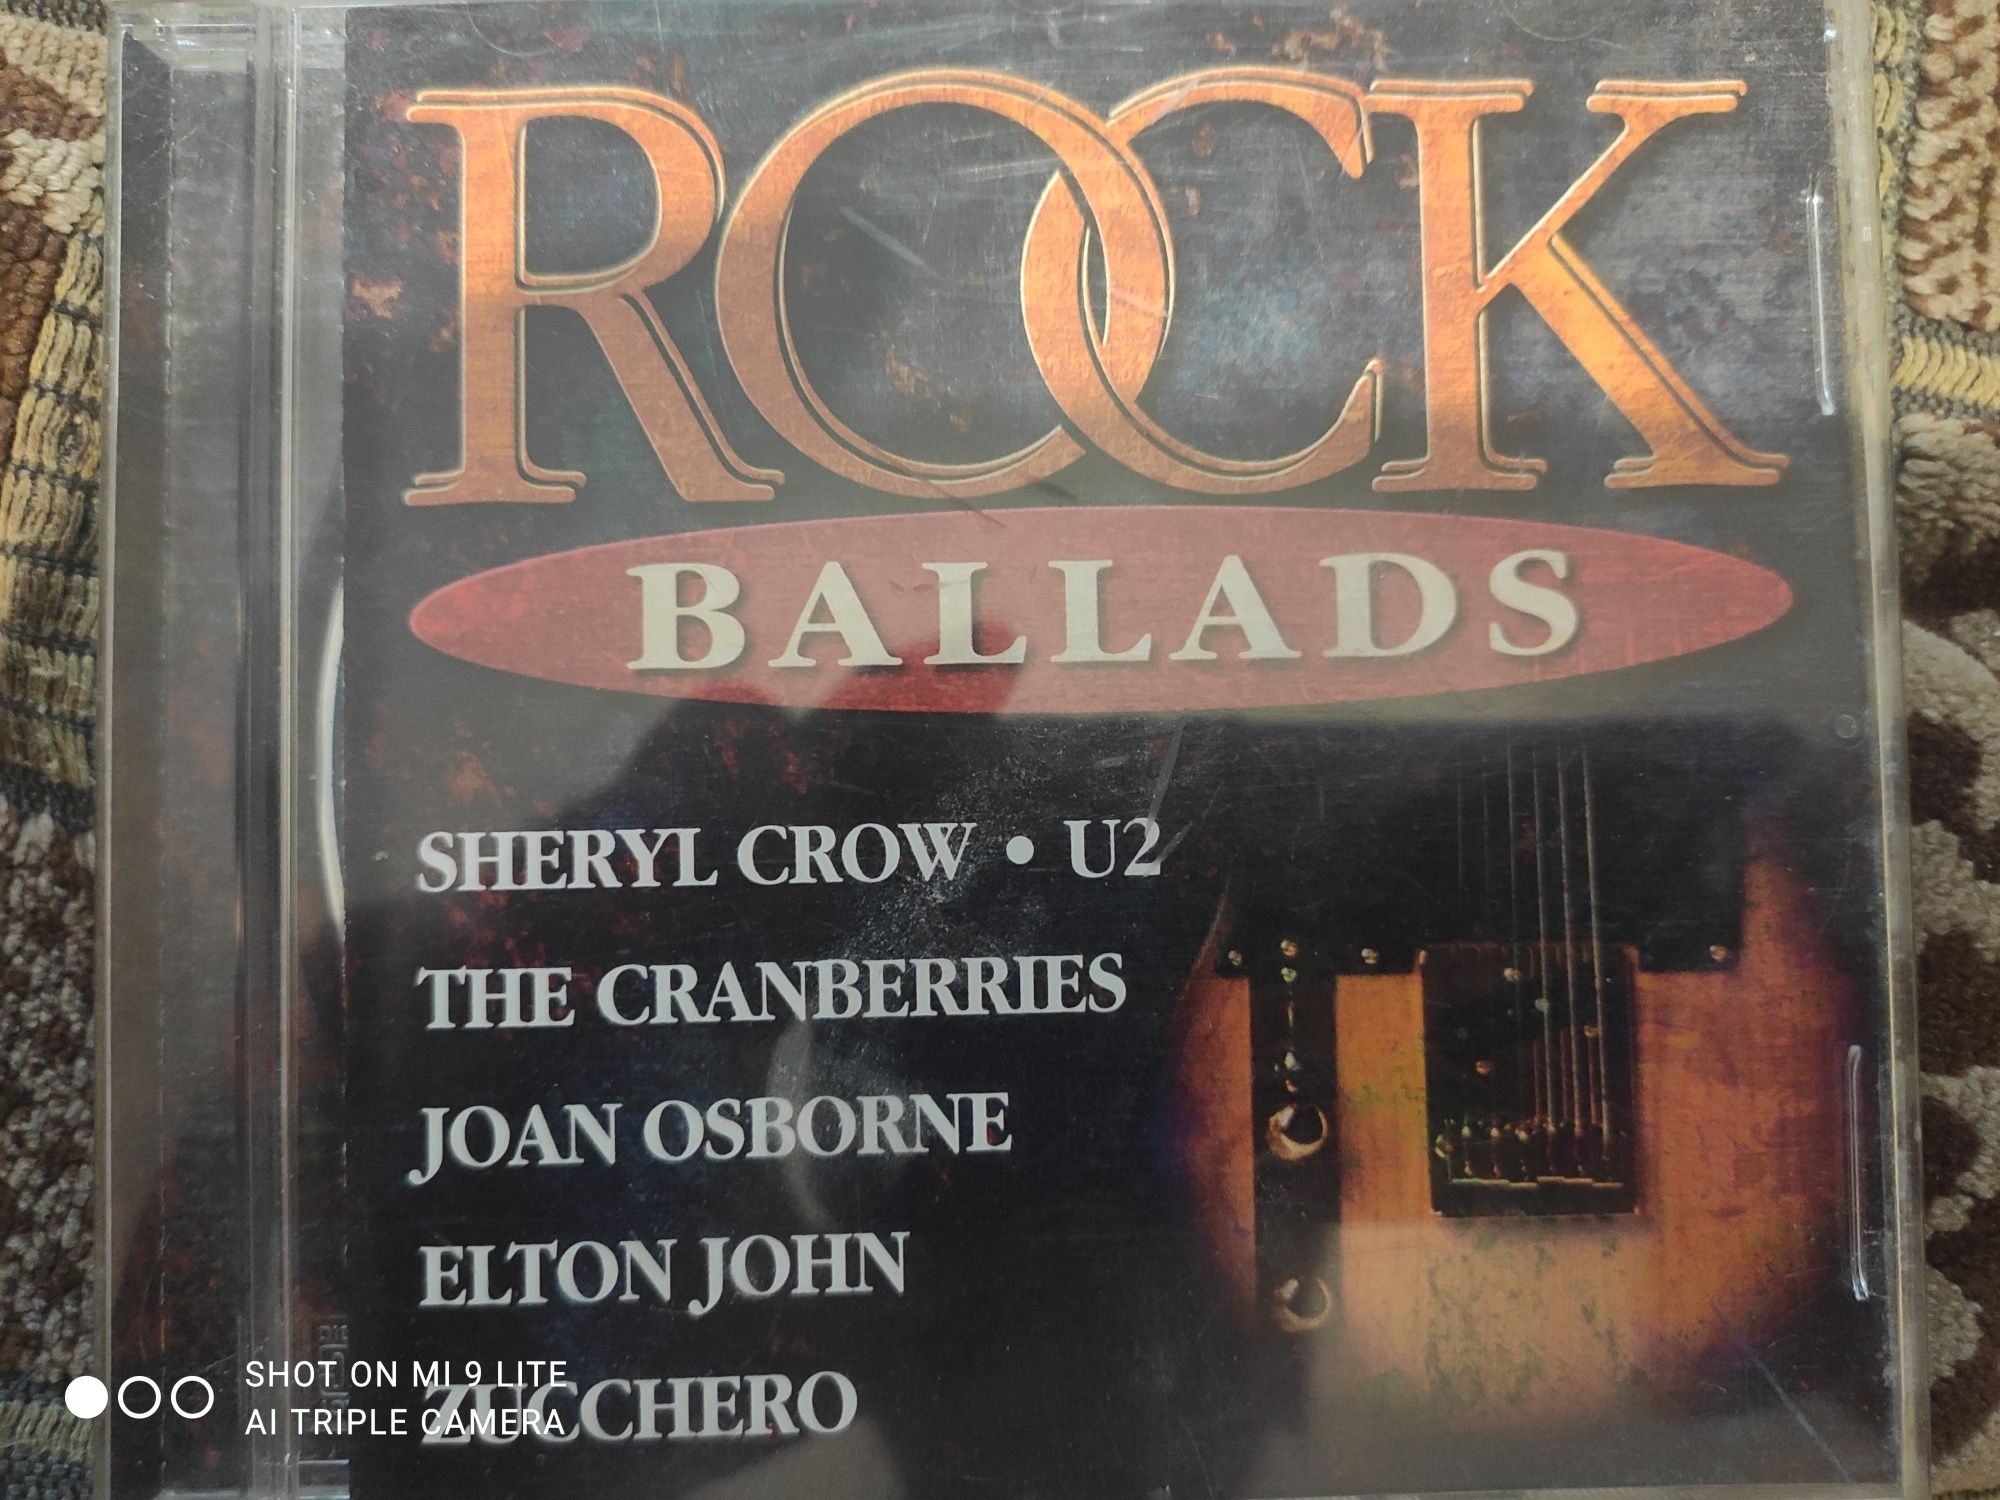 2.CD.Rock ballаds выпущен 1996 году